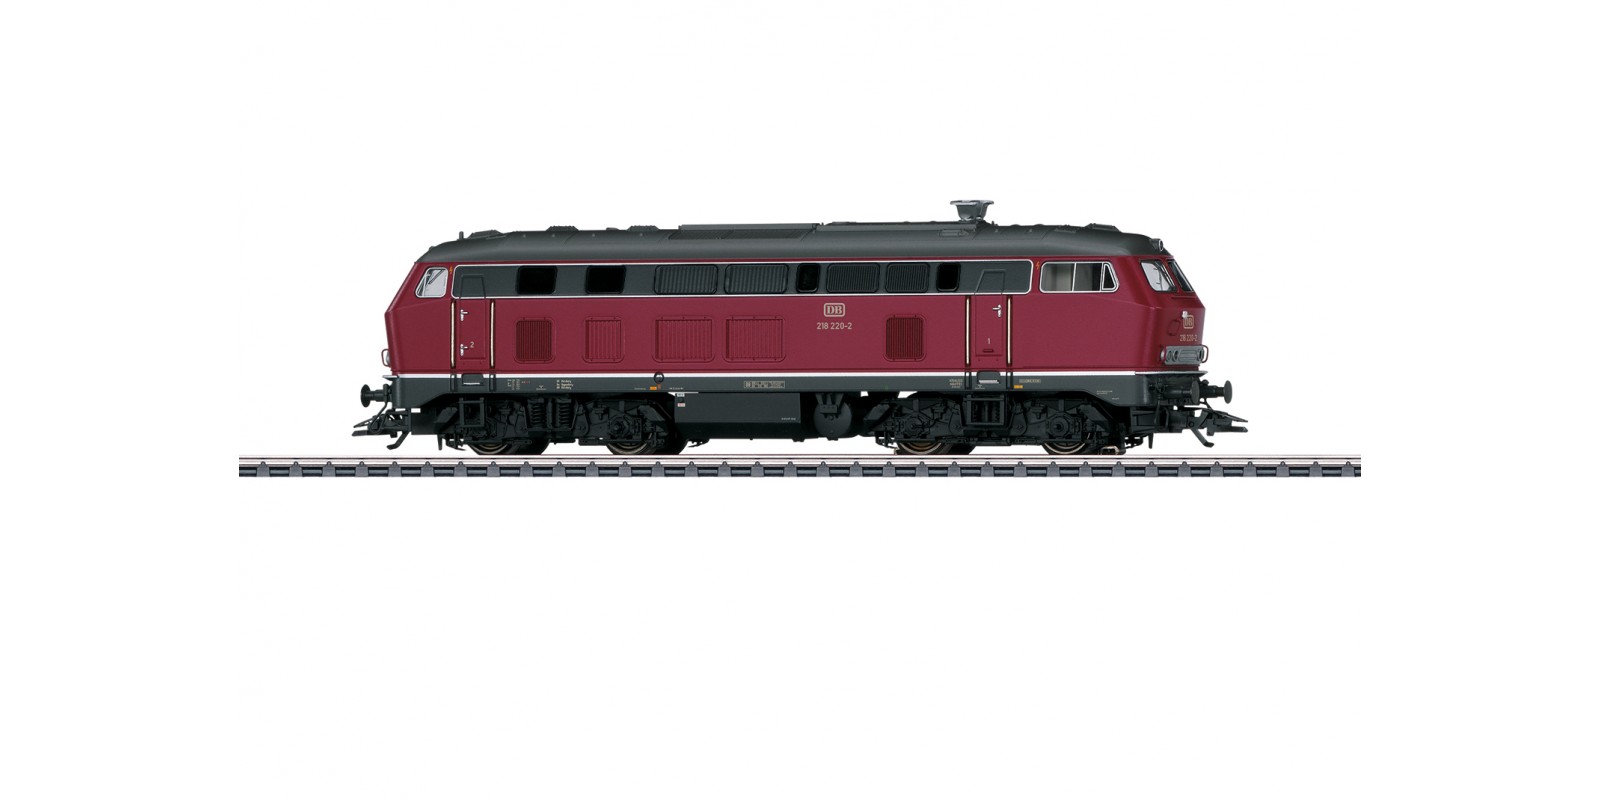 37765 Class 218 Diesel Locomotive